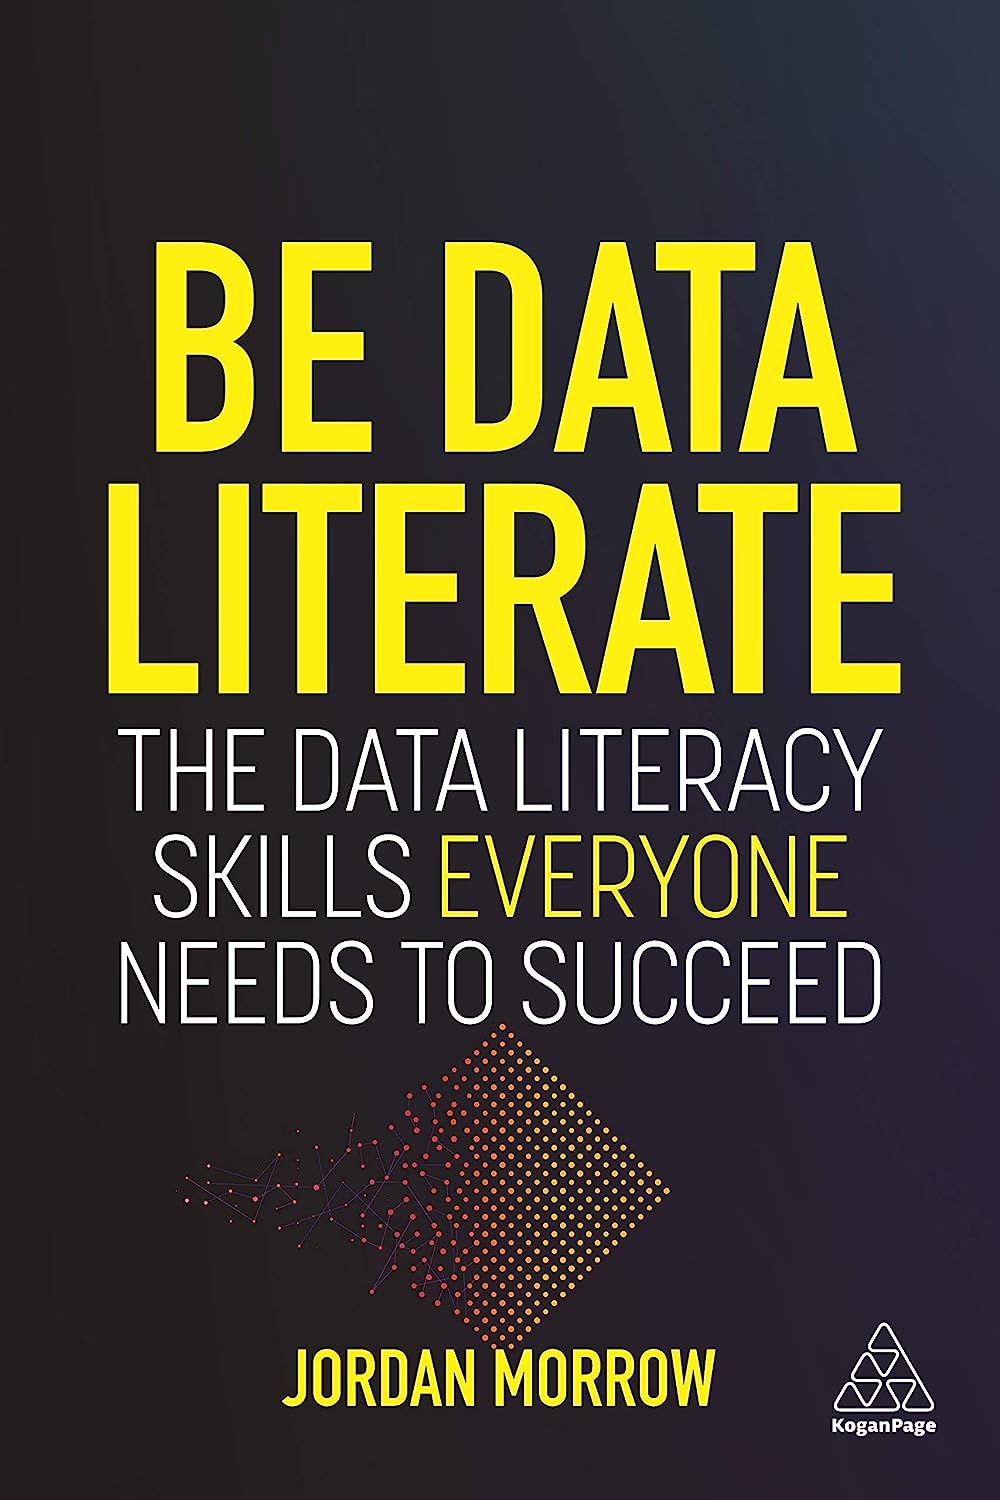 Be data literate